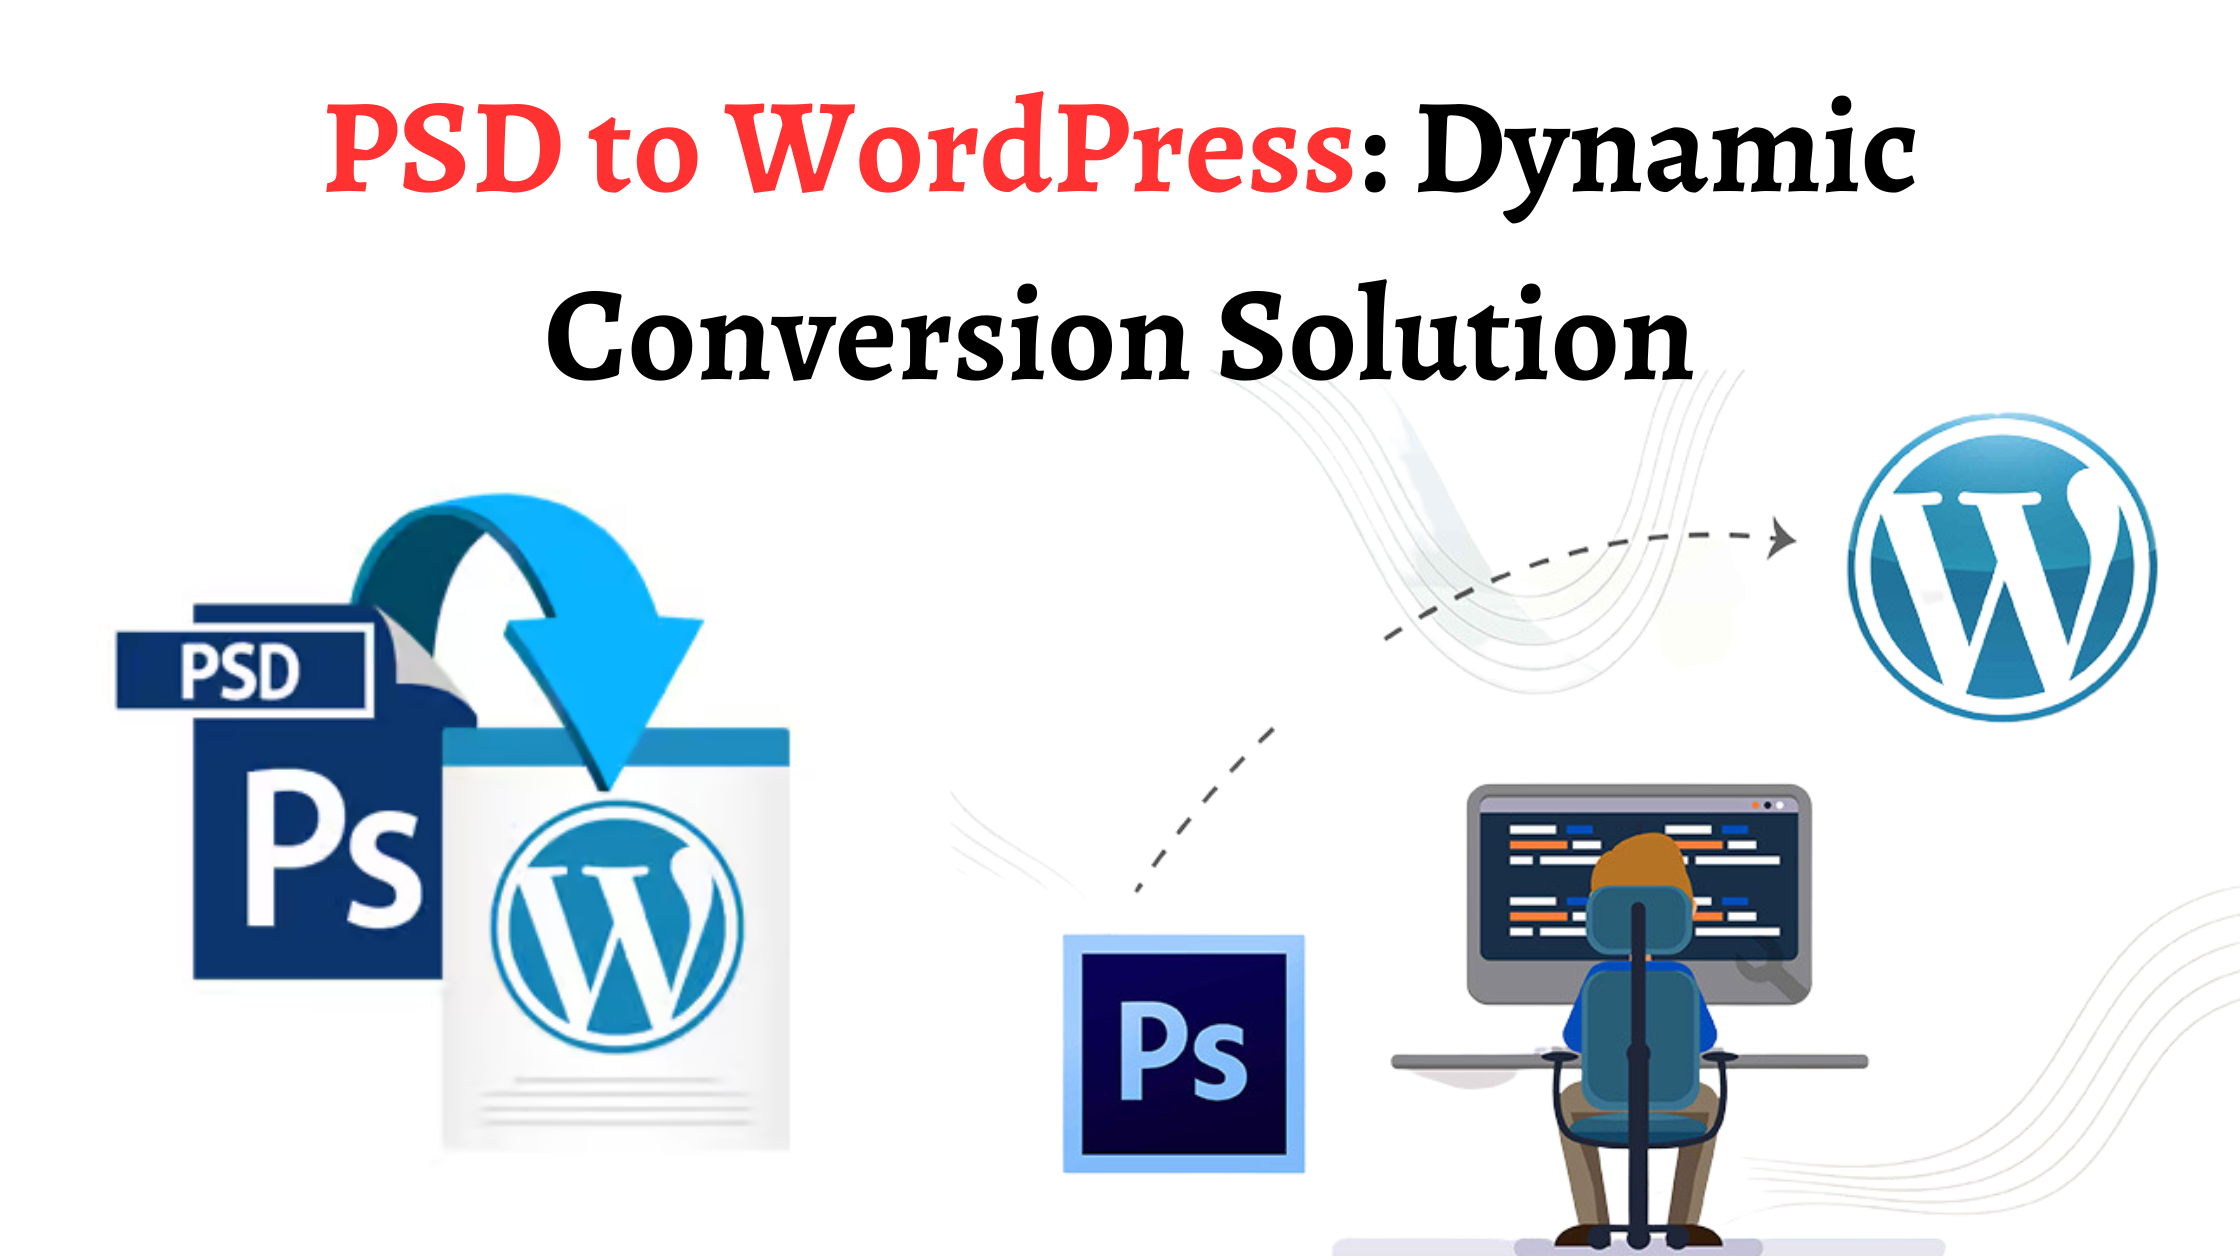 PSD to WordPress: Dynamic Conversion Solution